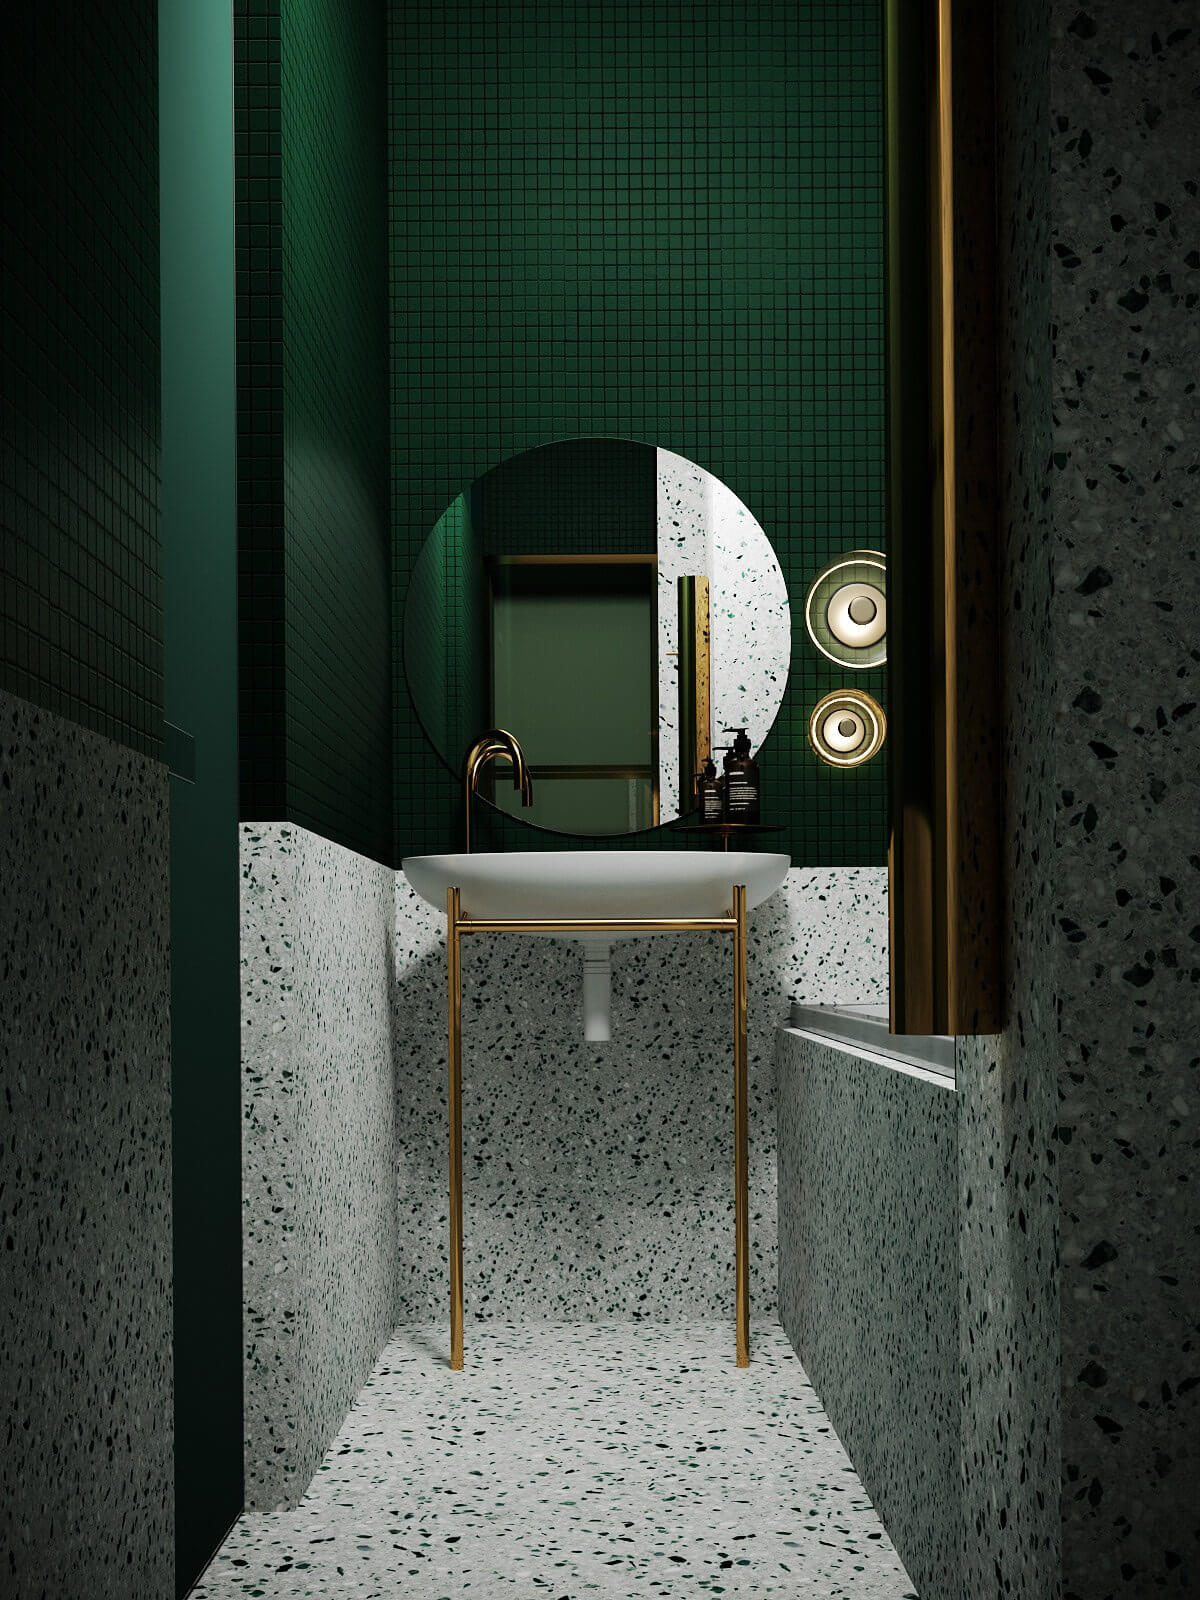 New York concept house bathroom cabinet sink - cgi visualization